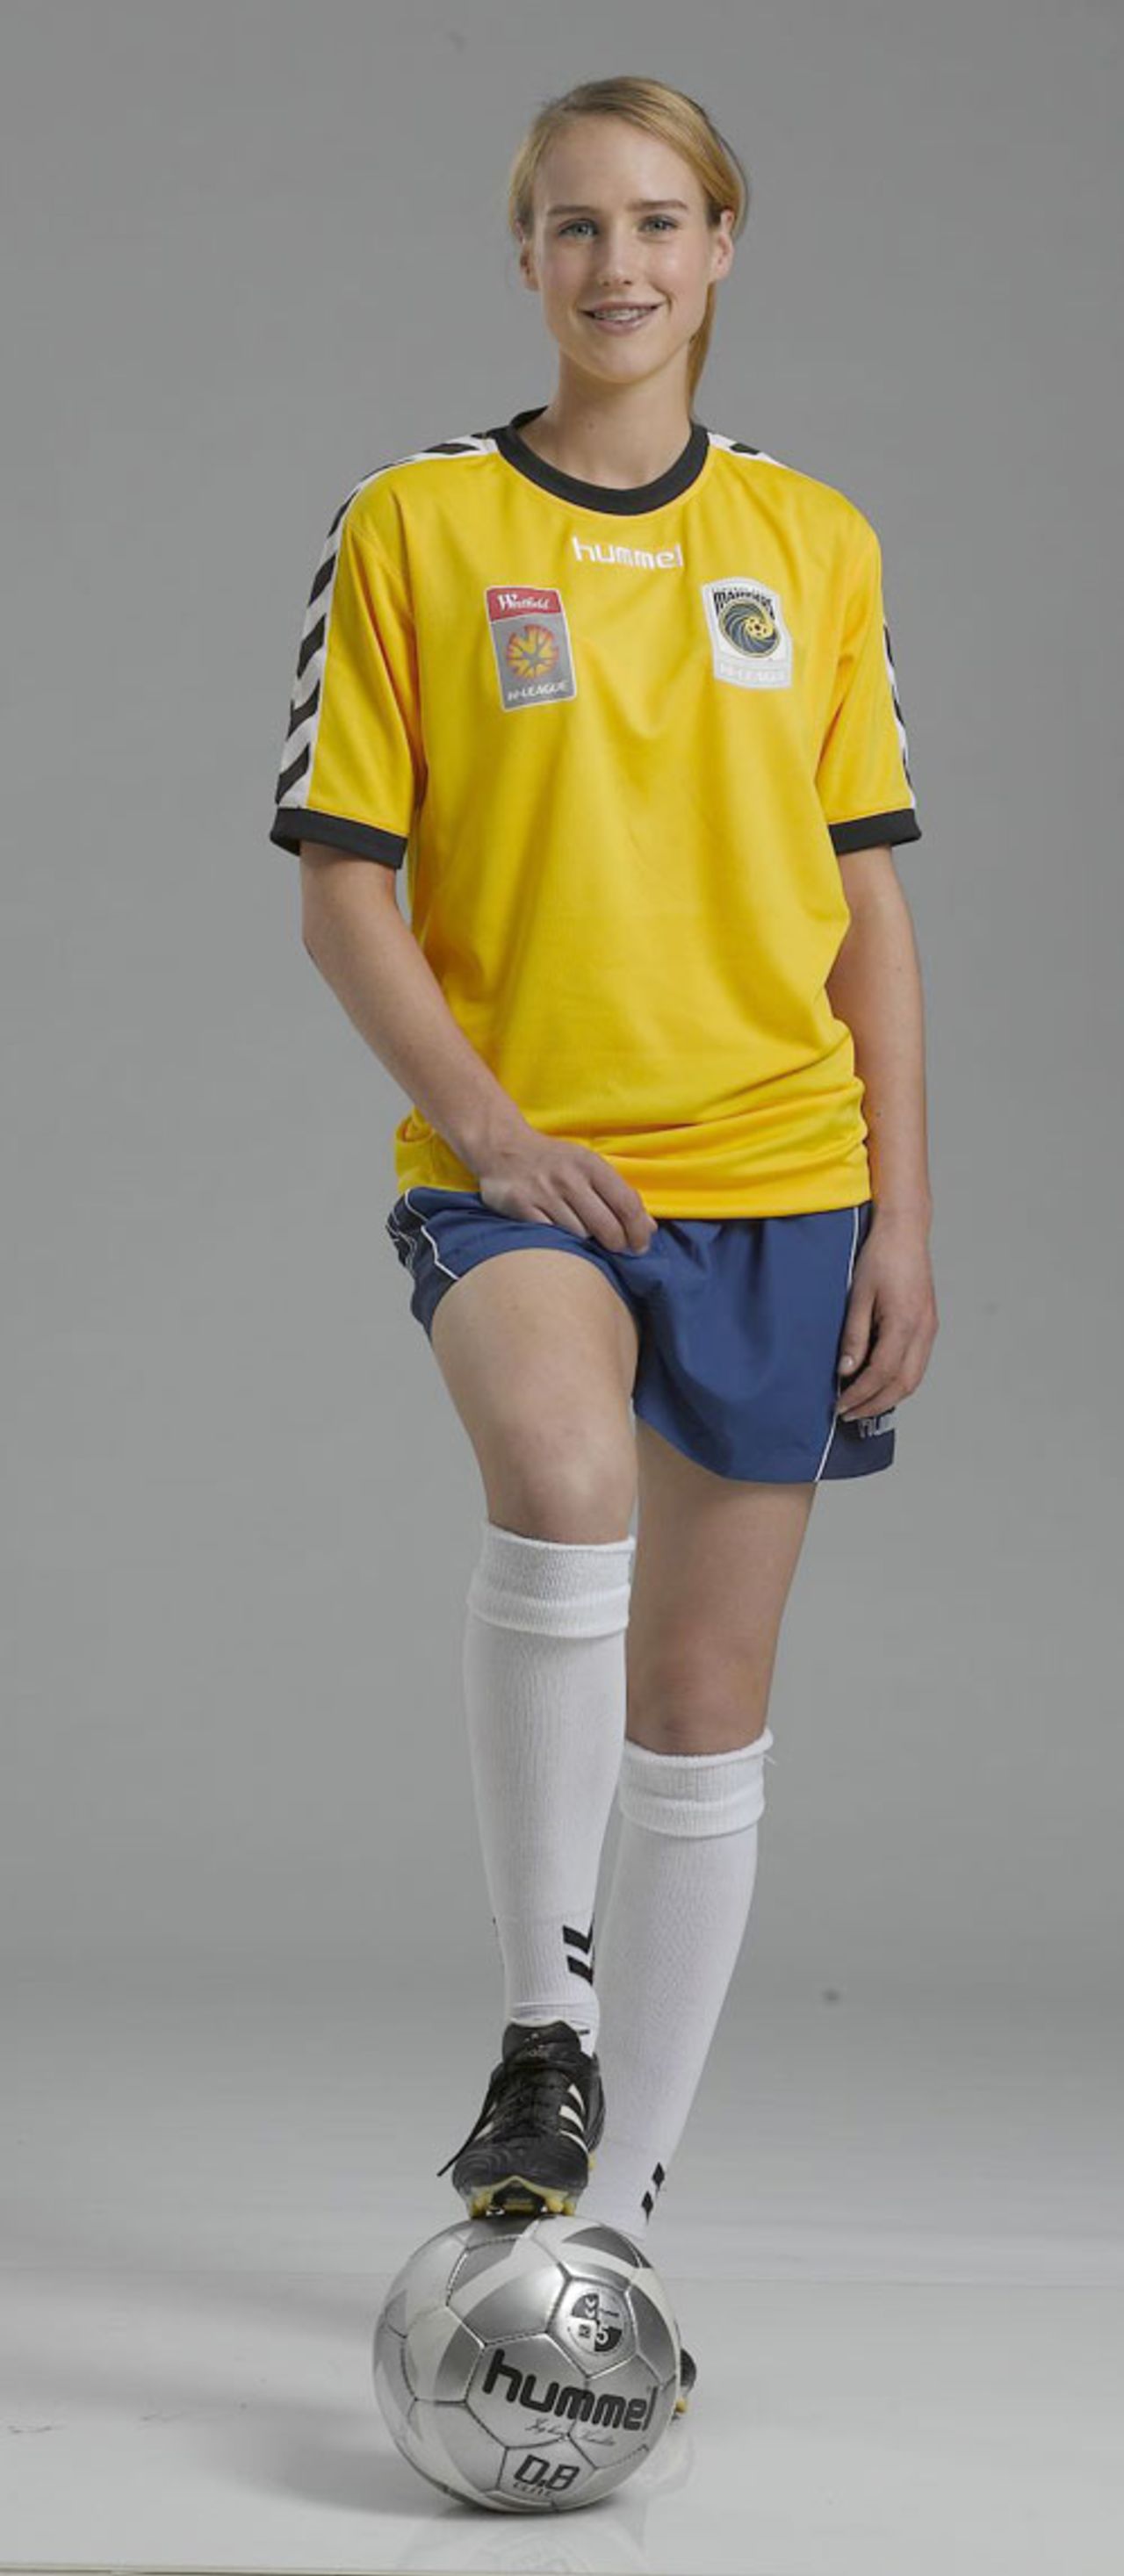 Ellyse Perry in her Australian soccer gear, November 2008